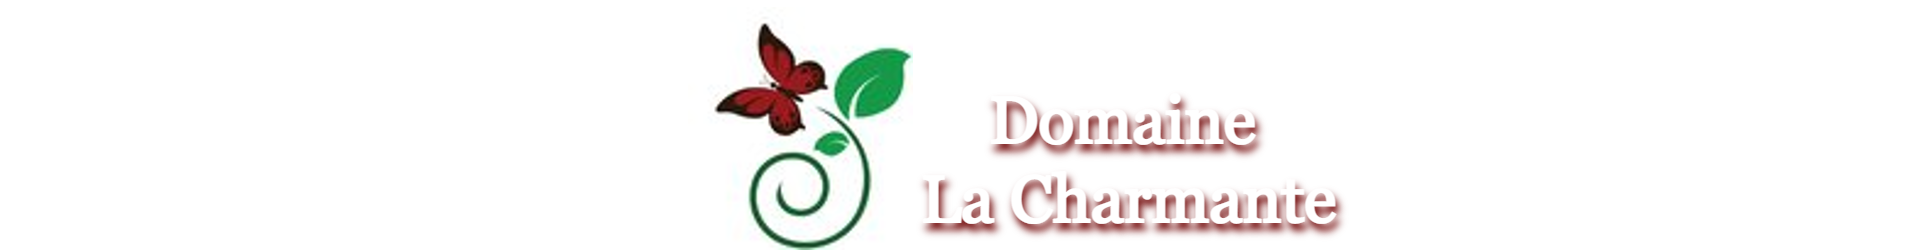 Domaine La Charmante